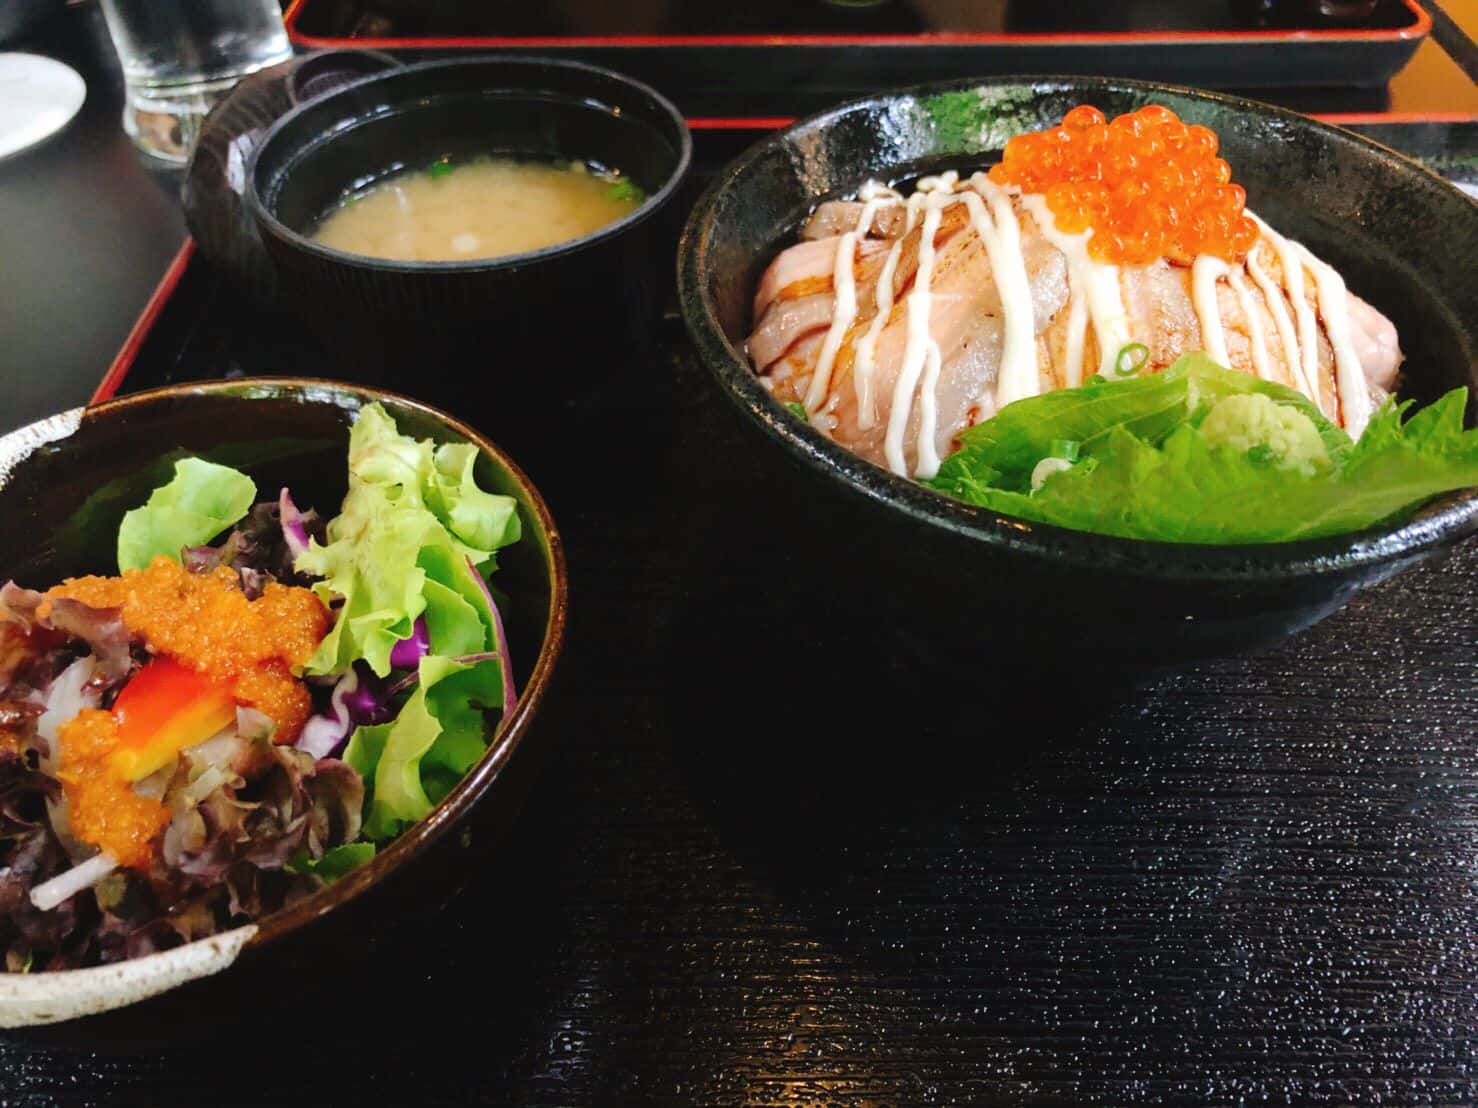 Touka restaurant ร้านอาหารญี่ปุ่นสไตล์อิซากายะ ร้านอาหารญี่ปุ่นย่านสีลม